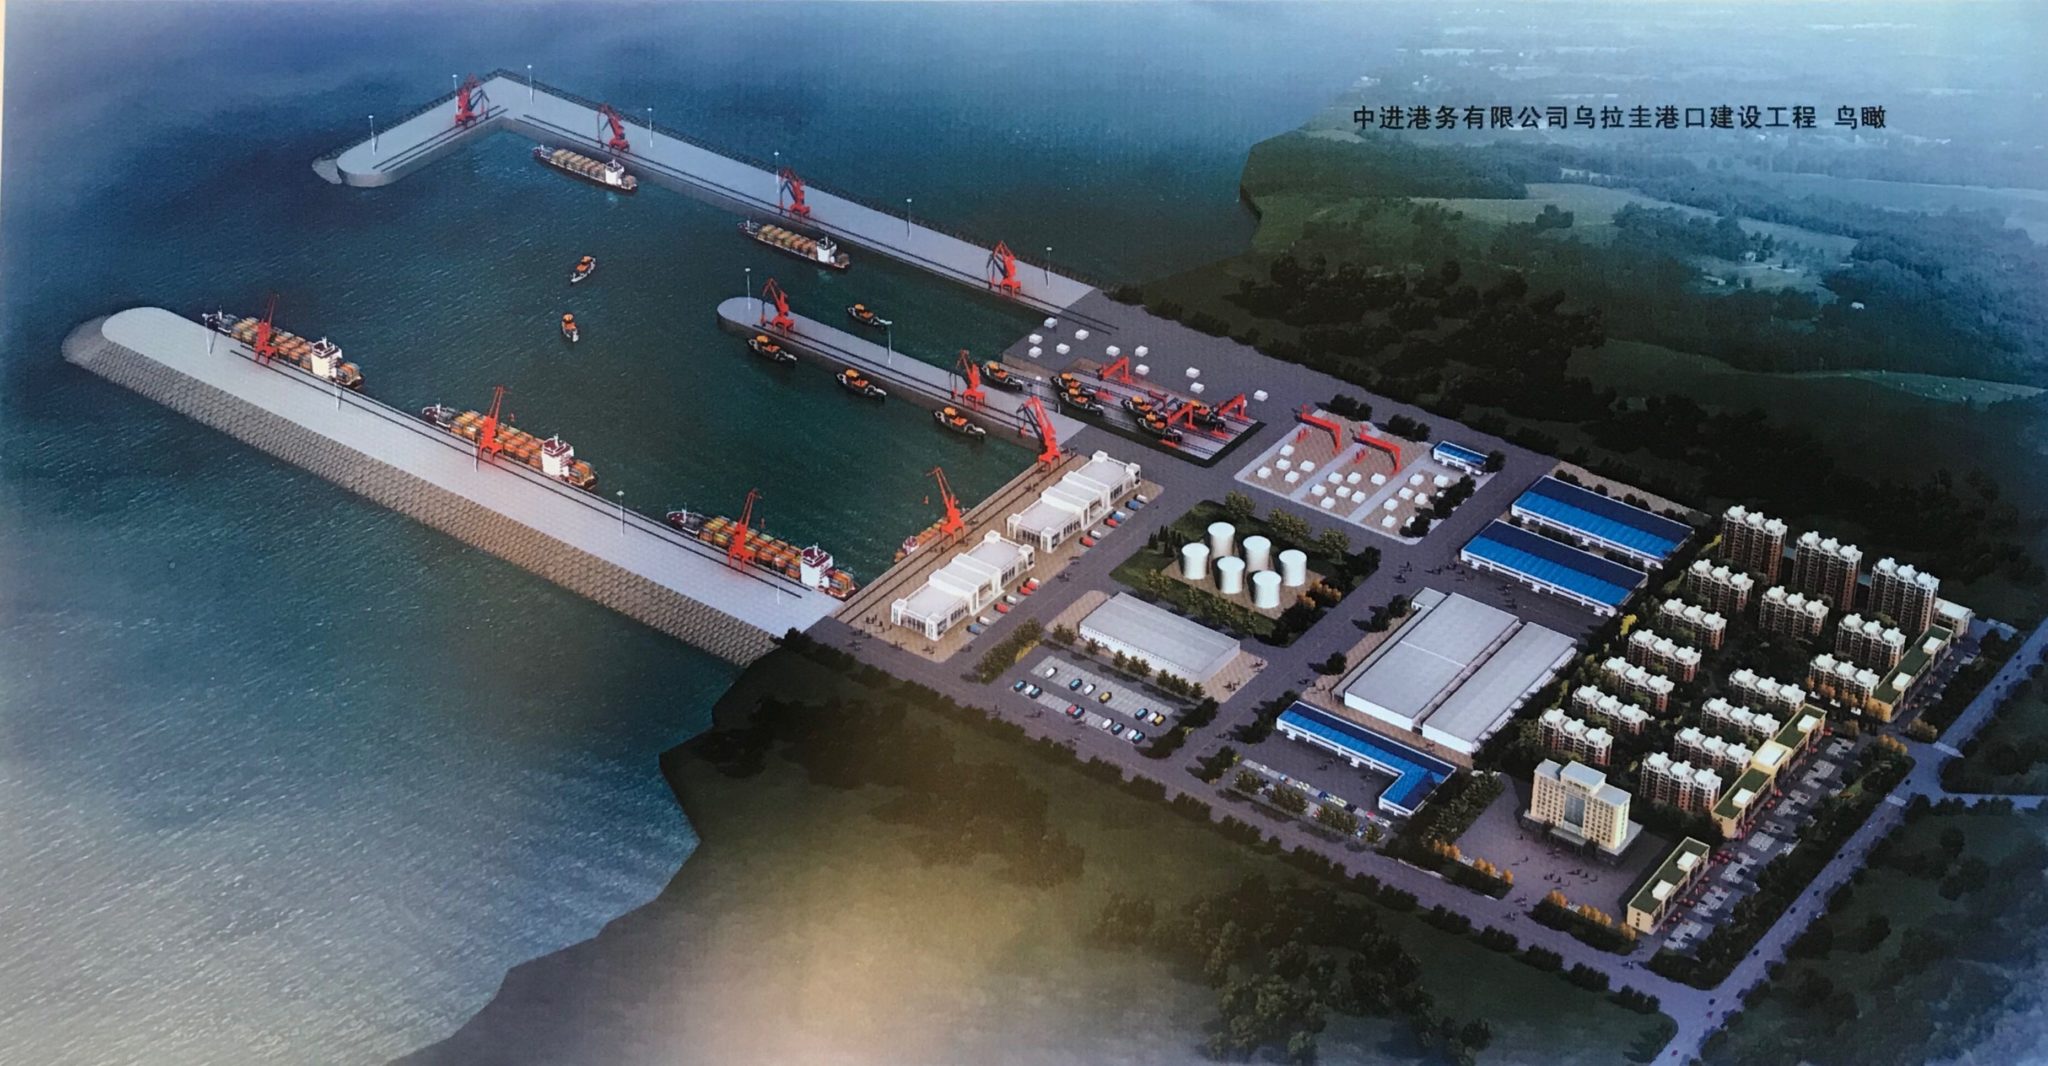 Plans for the port show a 500-metre dock, shipyard and factory (Image: Fermín Koop)